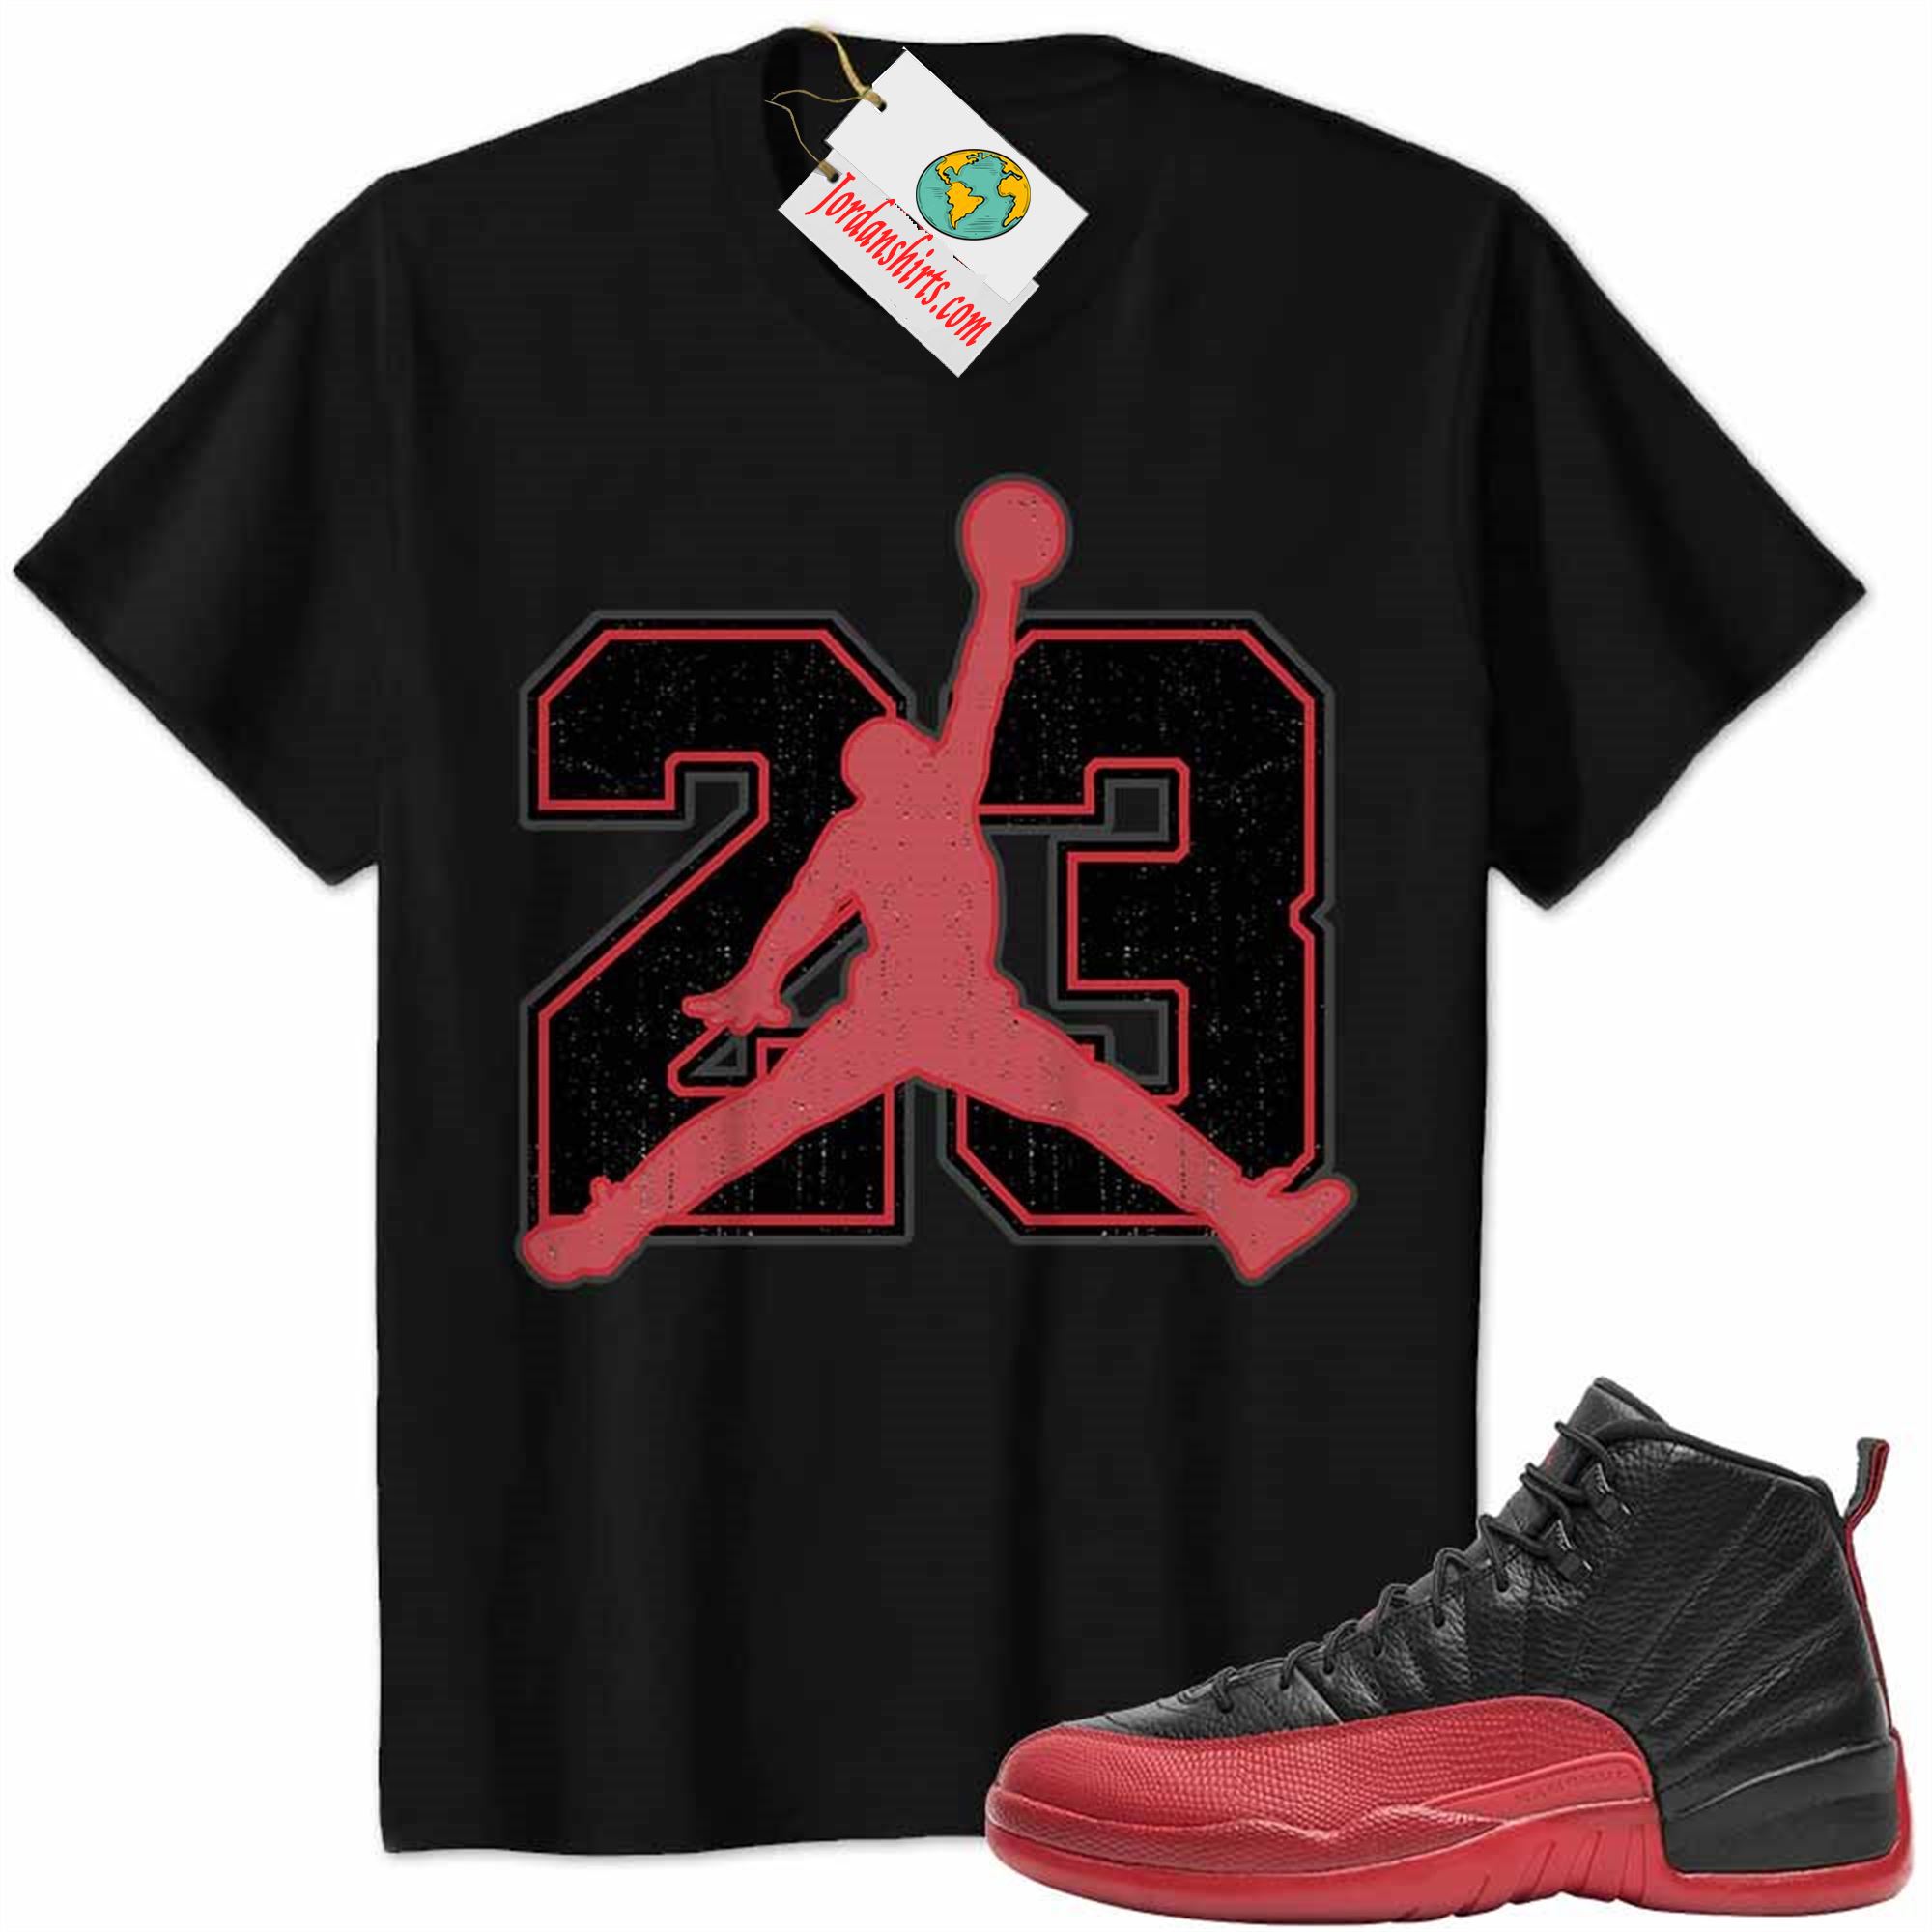 Jordan 12 Shirt, Jordan 12 Flu Game Shirt Jumpman No23 Black Plus Size Up To 5xl